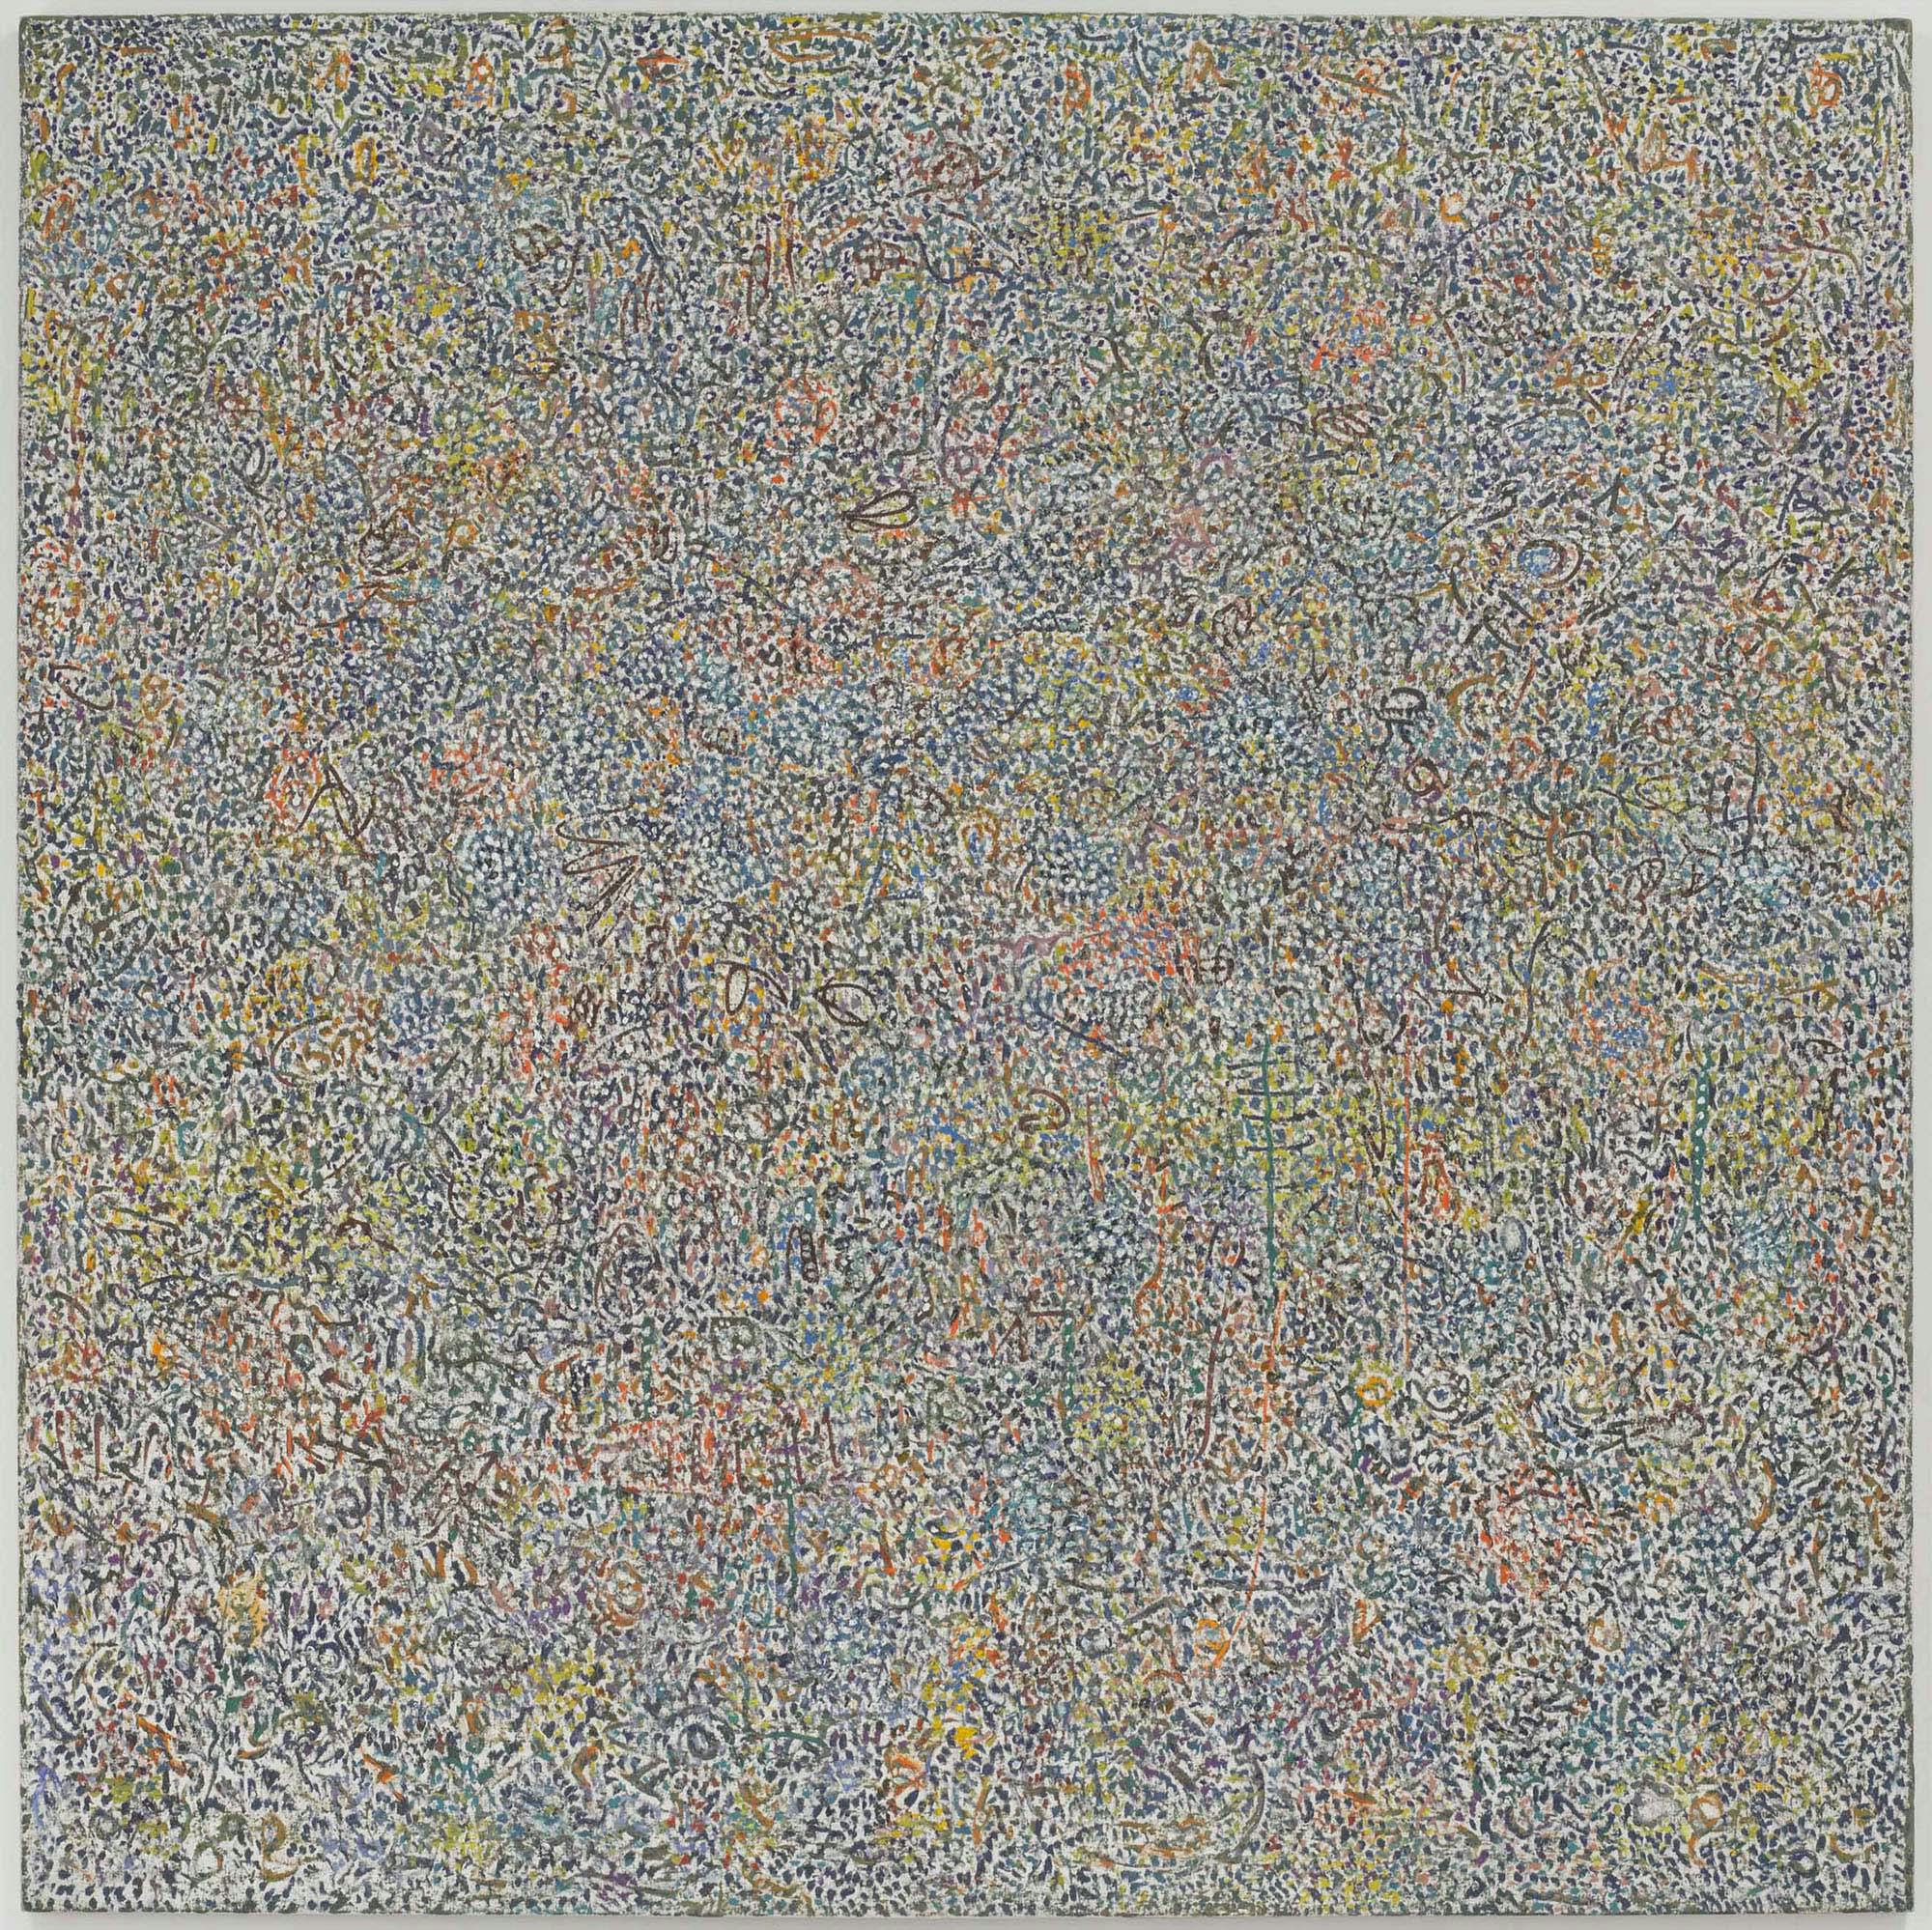 Presence, Amaranth Garden #1
1974
Oil on linen
90 x 90 in. (228.6 x 228.6 cm)
 – The Richard Pousette-Dart Foundation